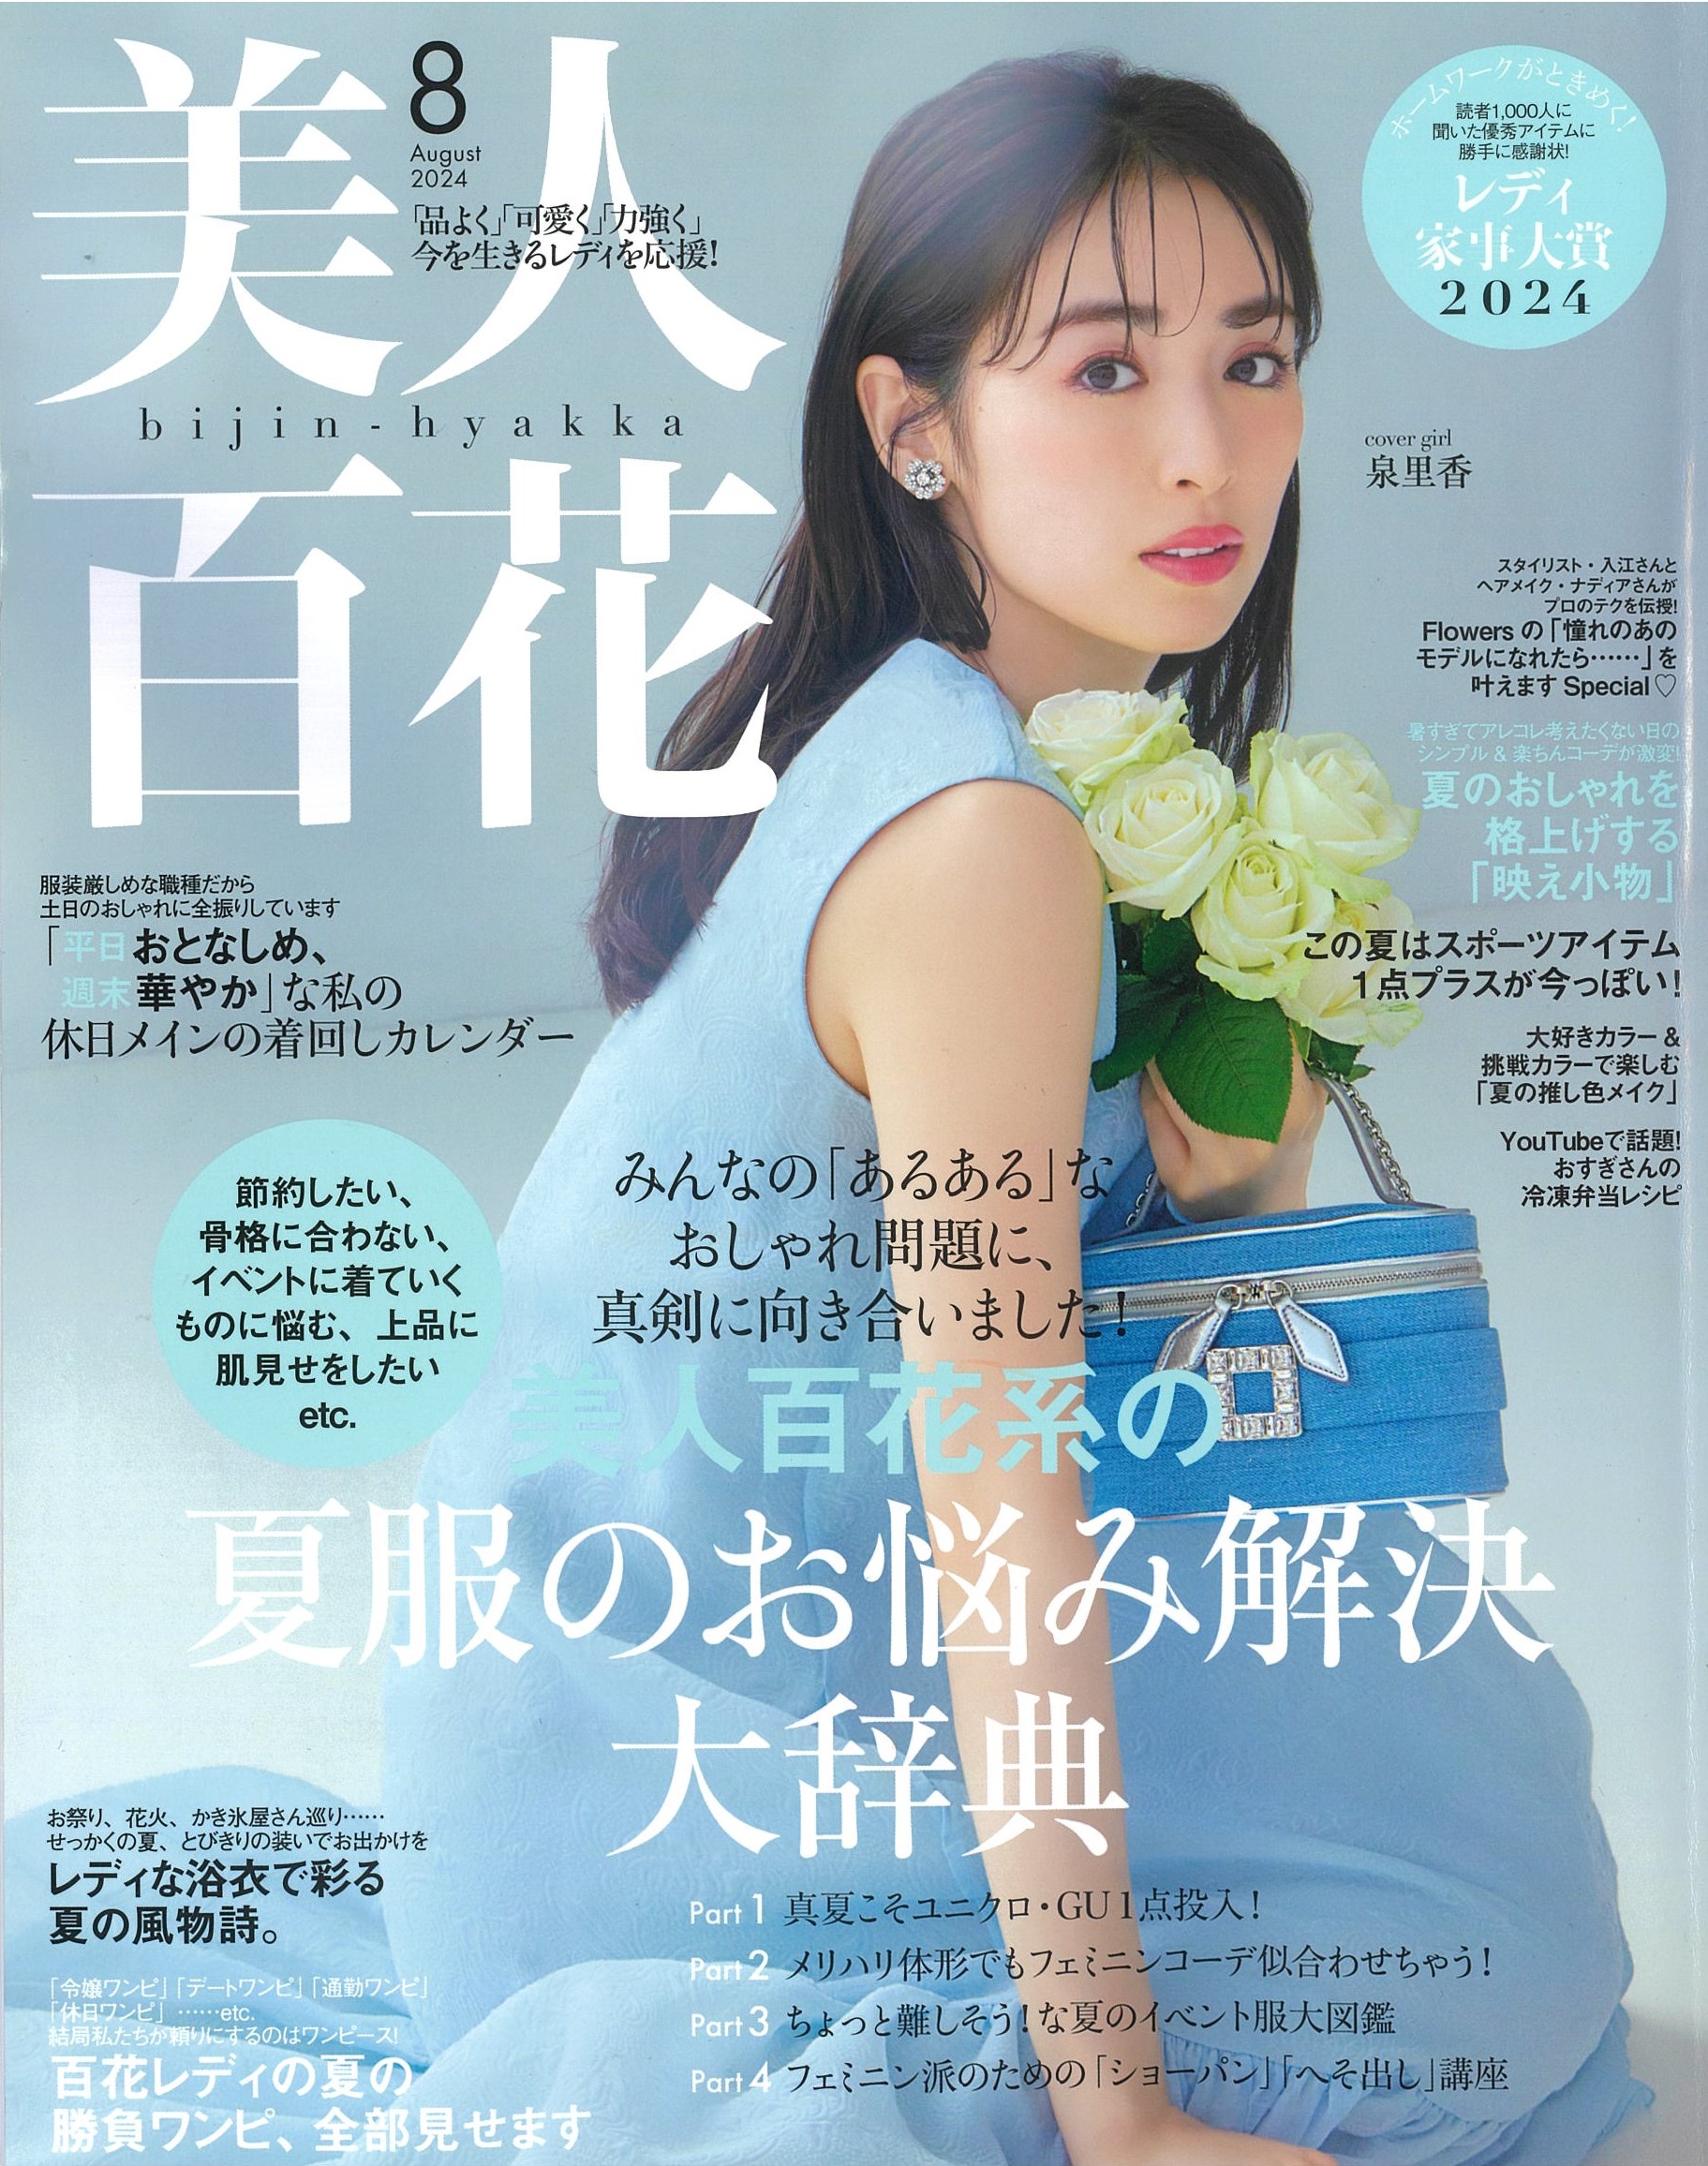 Launer London handbag is introduced in 『美人百花』 magazine.